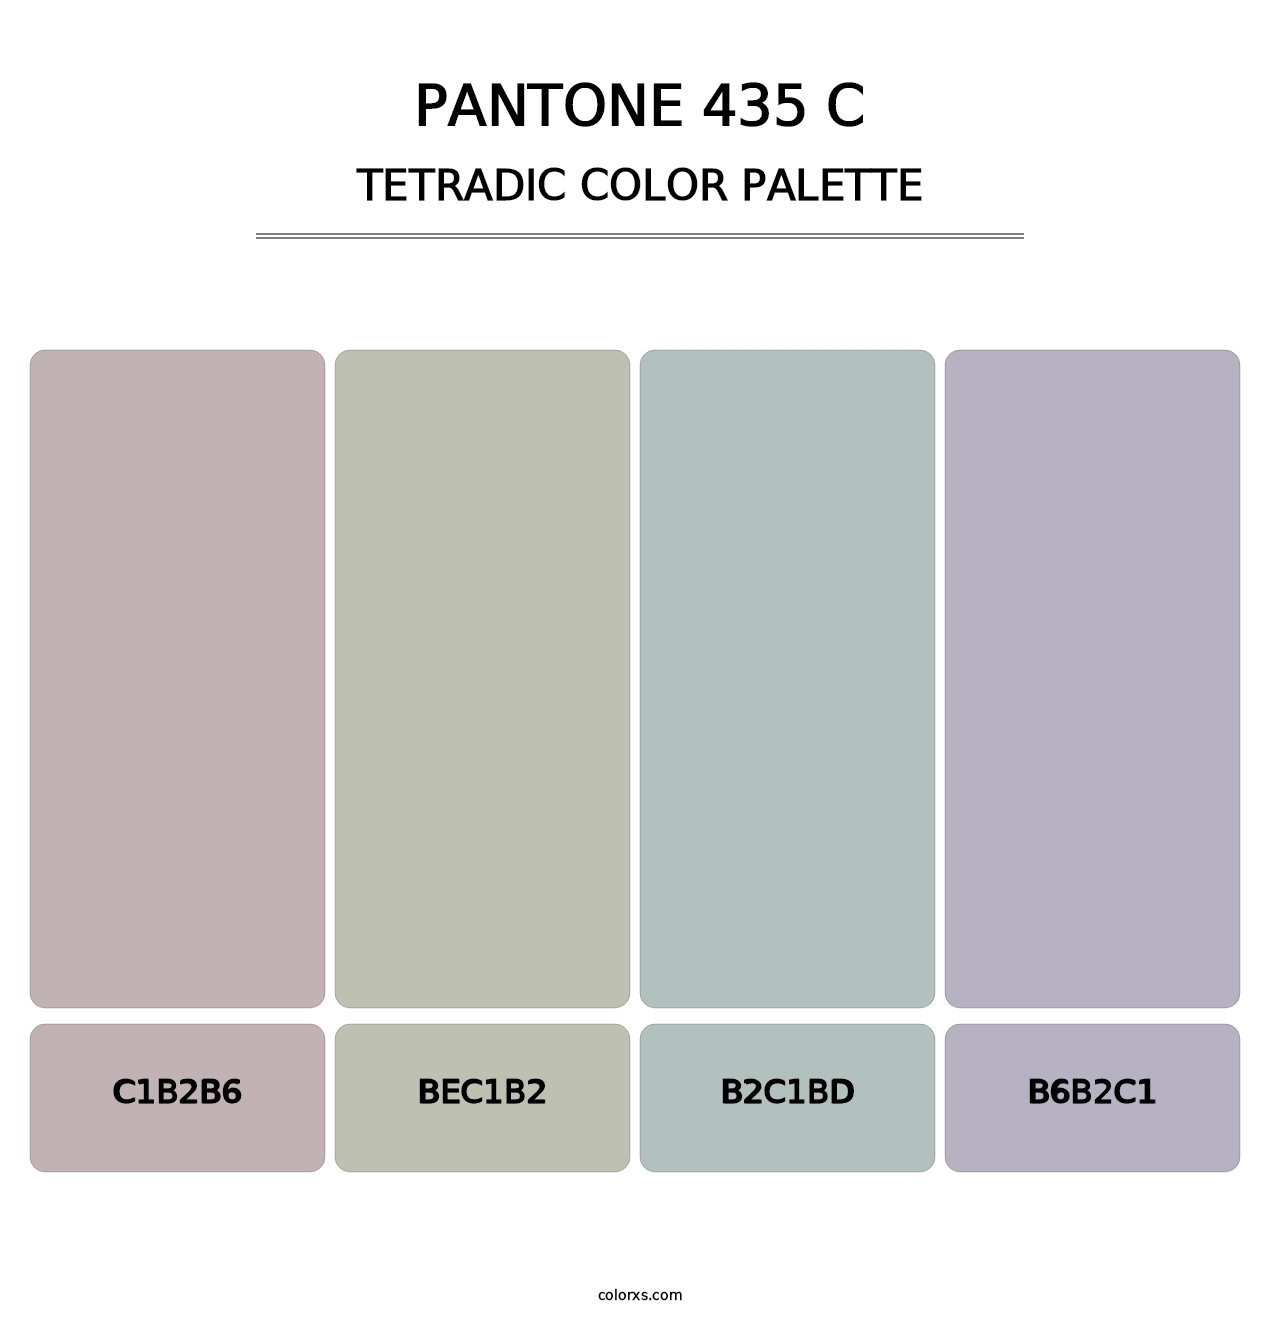 PANTONE 435 C - Tetradic Color Palette